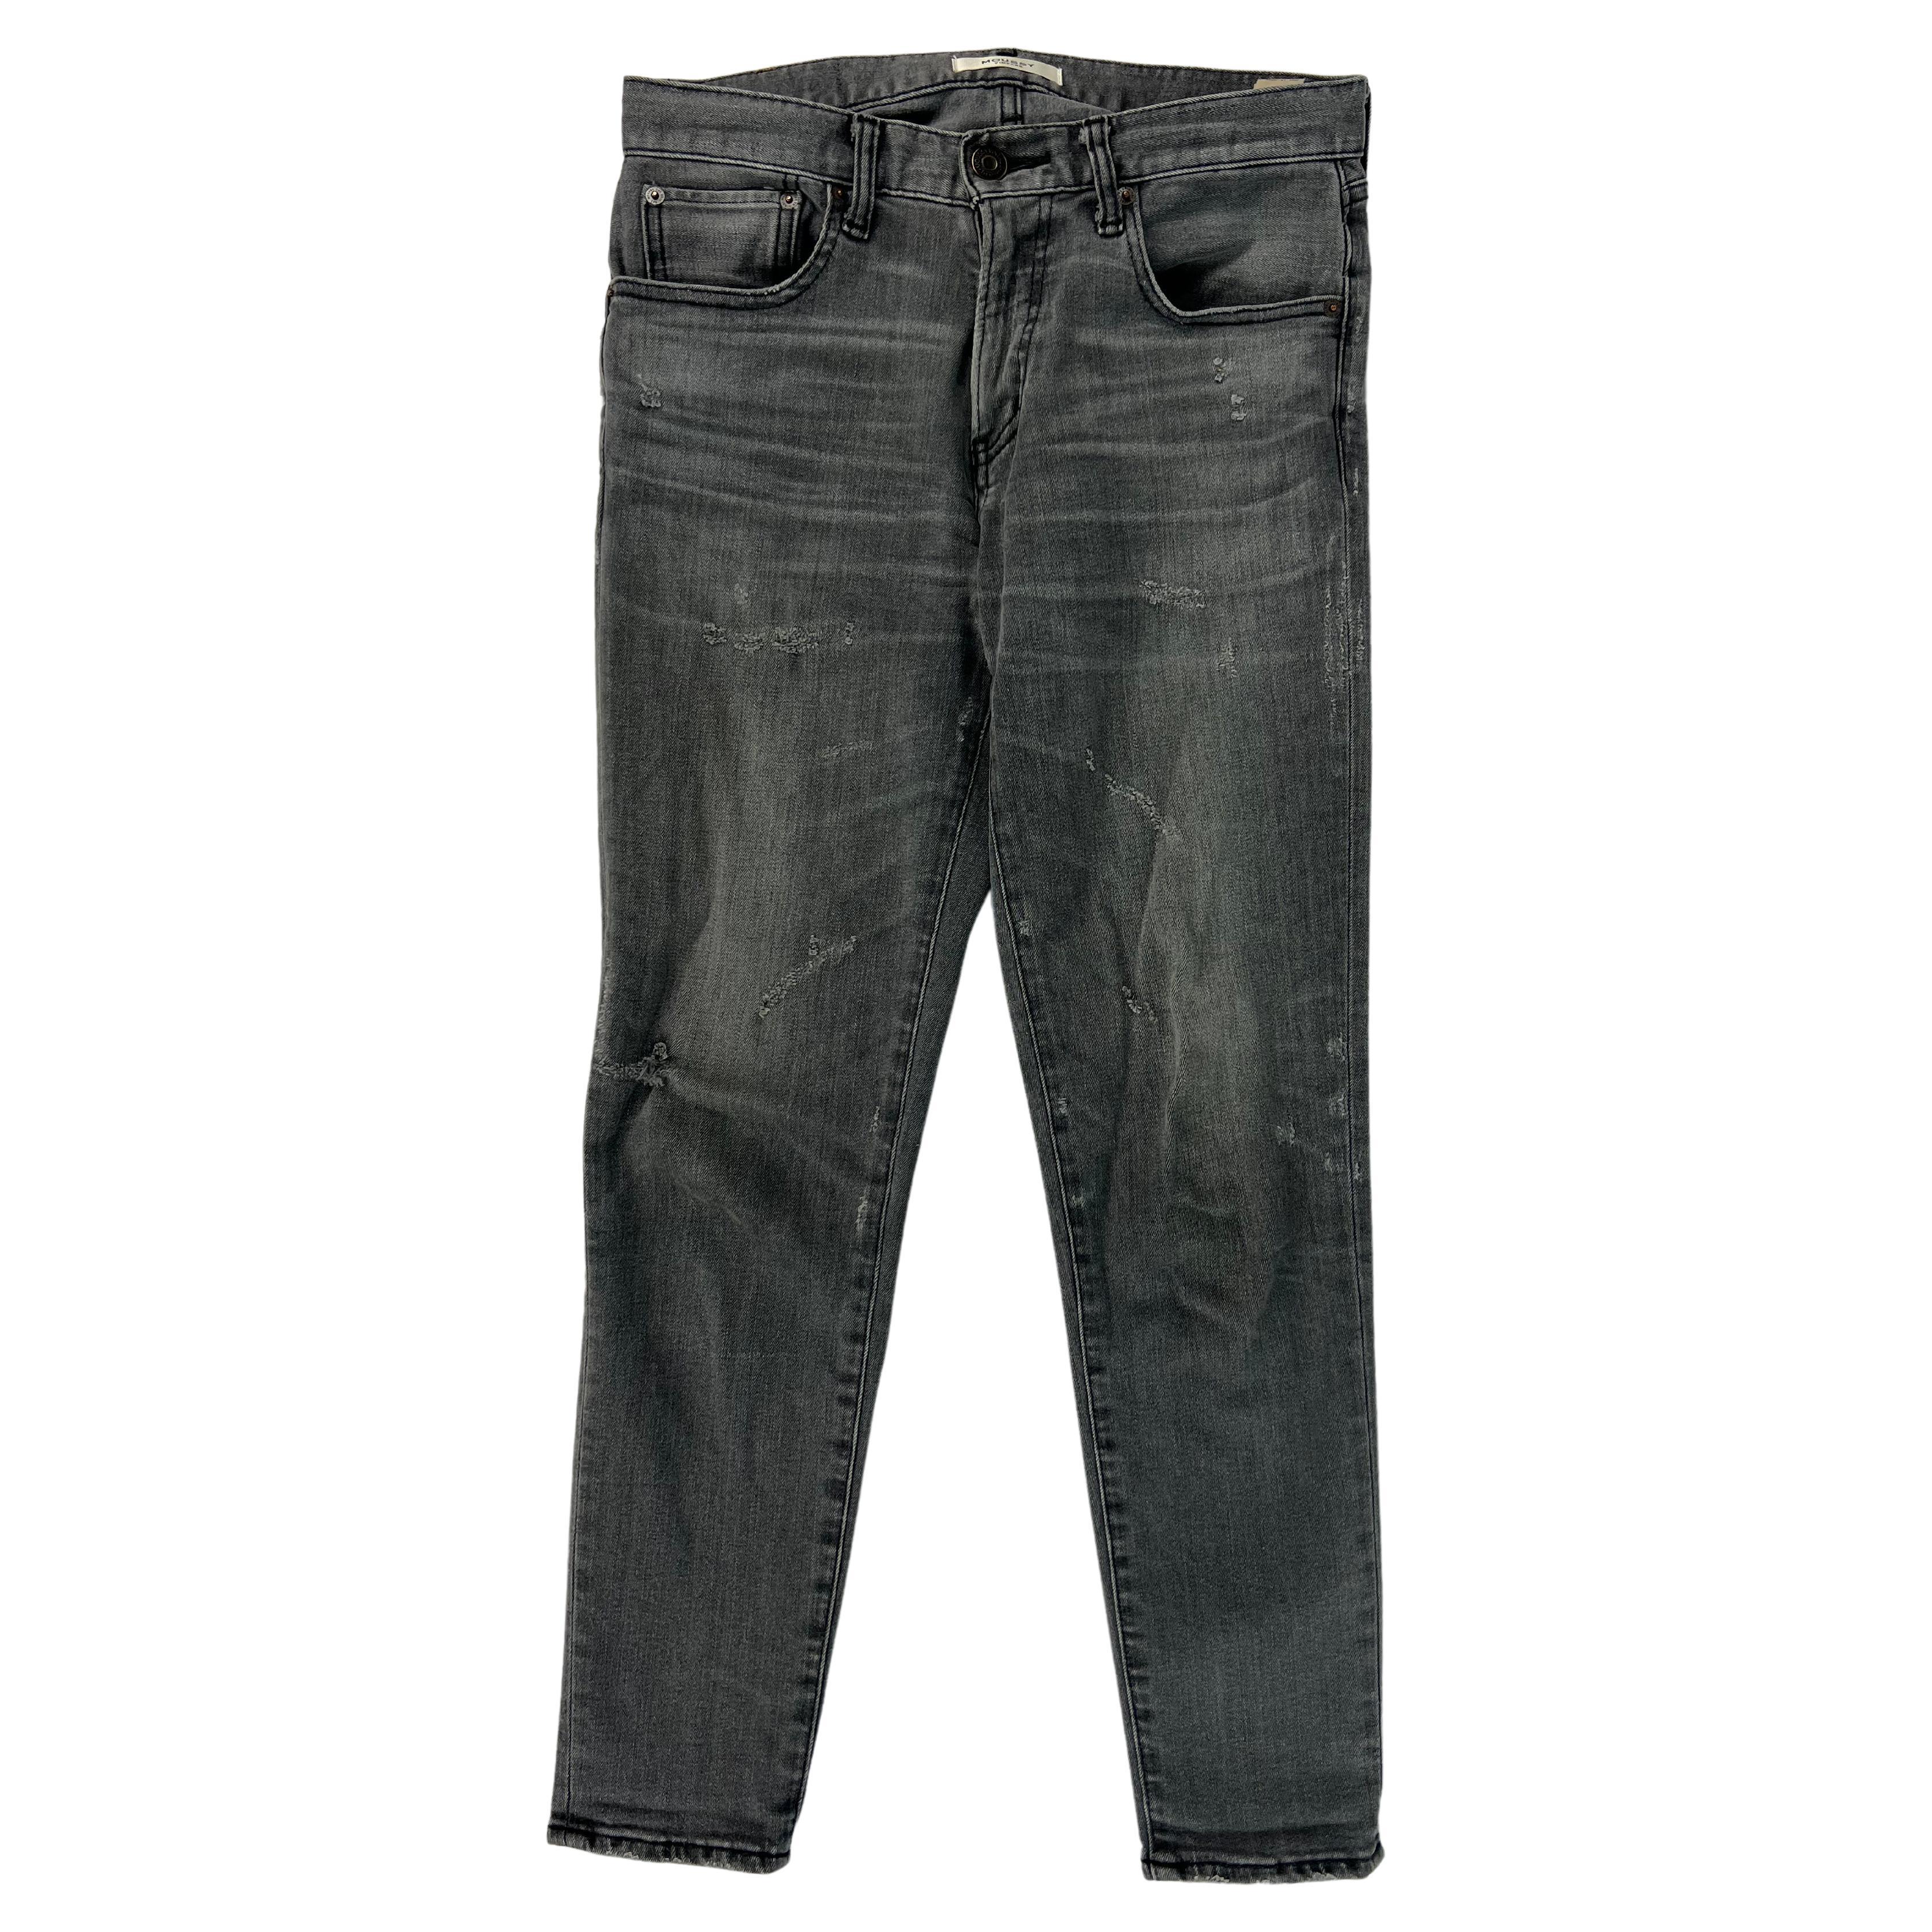 Mousy Vintage Grey Skinny Denim Jean Pants, Size 27 For Sale